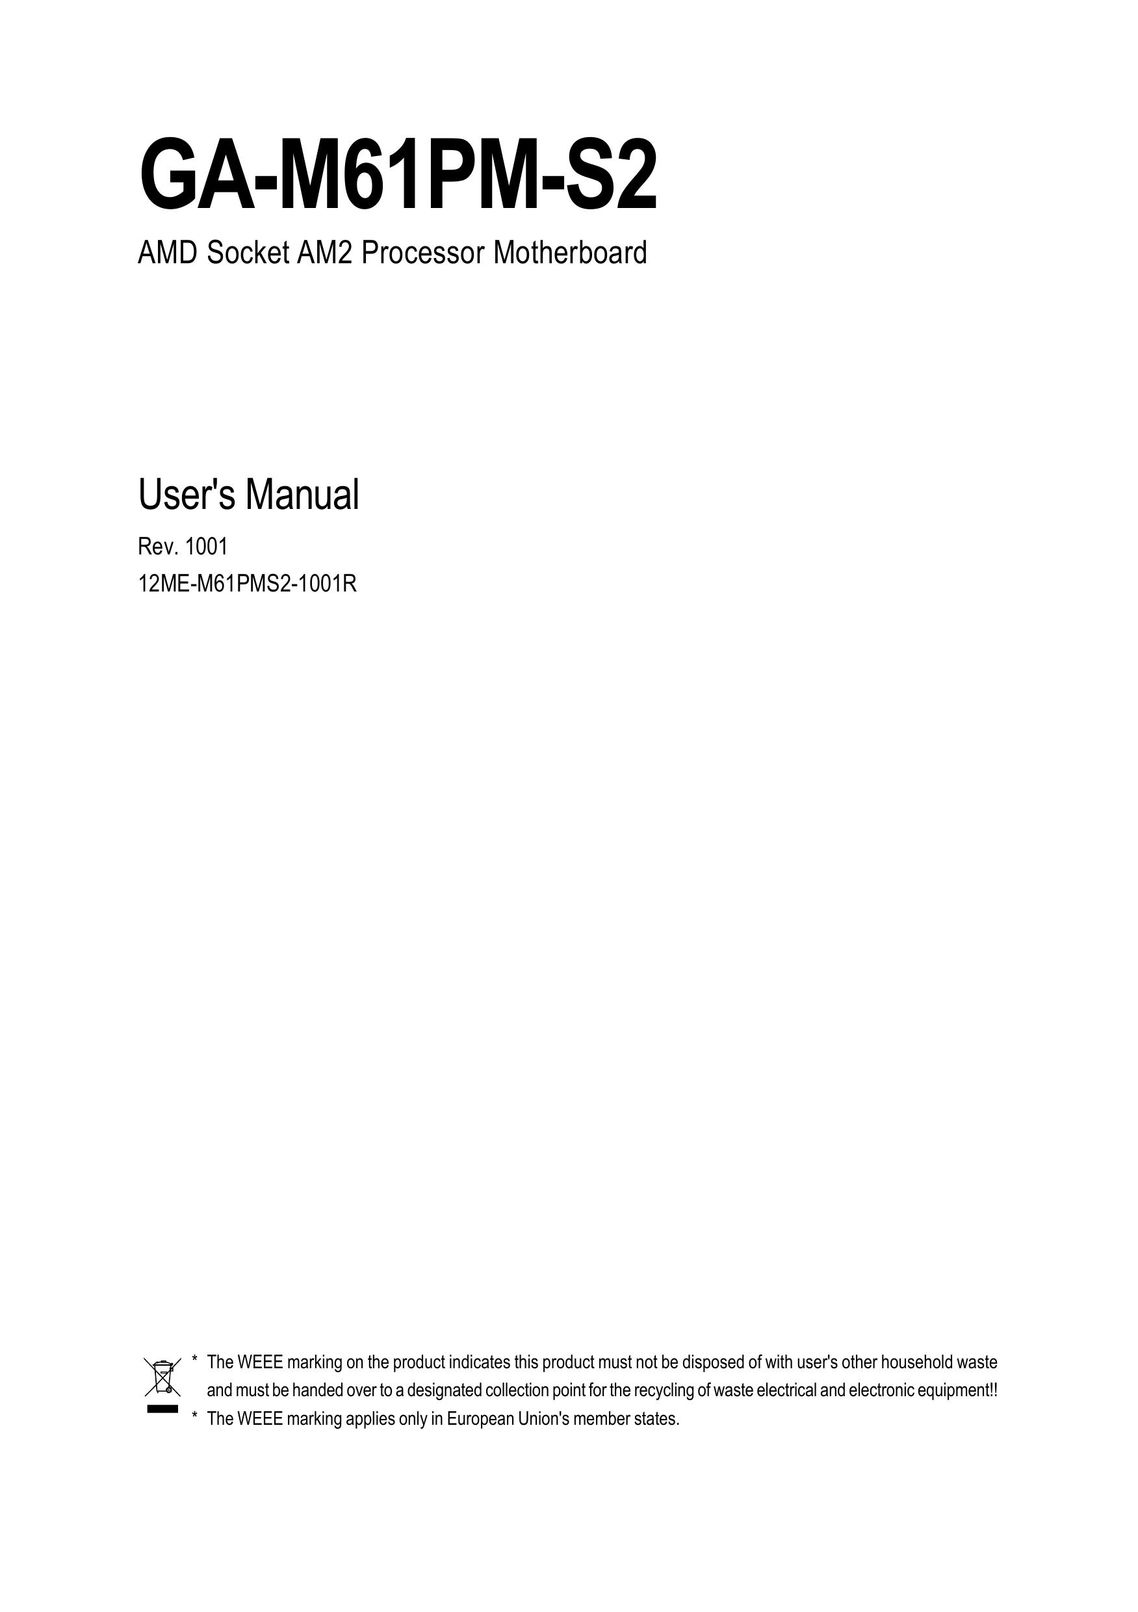 AMD GA-M61PM-S2 Computer Hardware User Manual